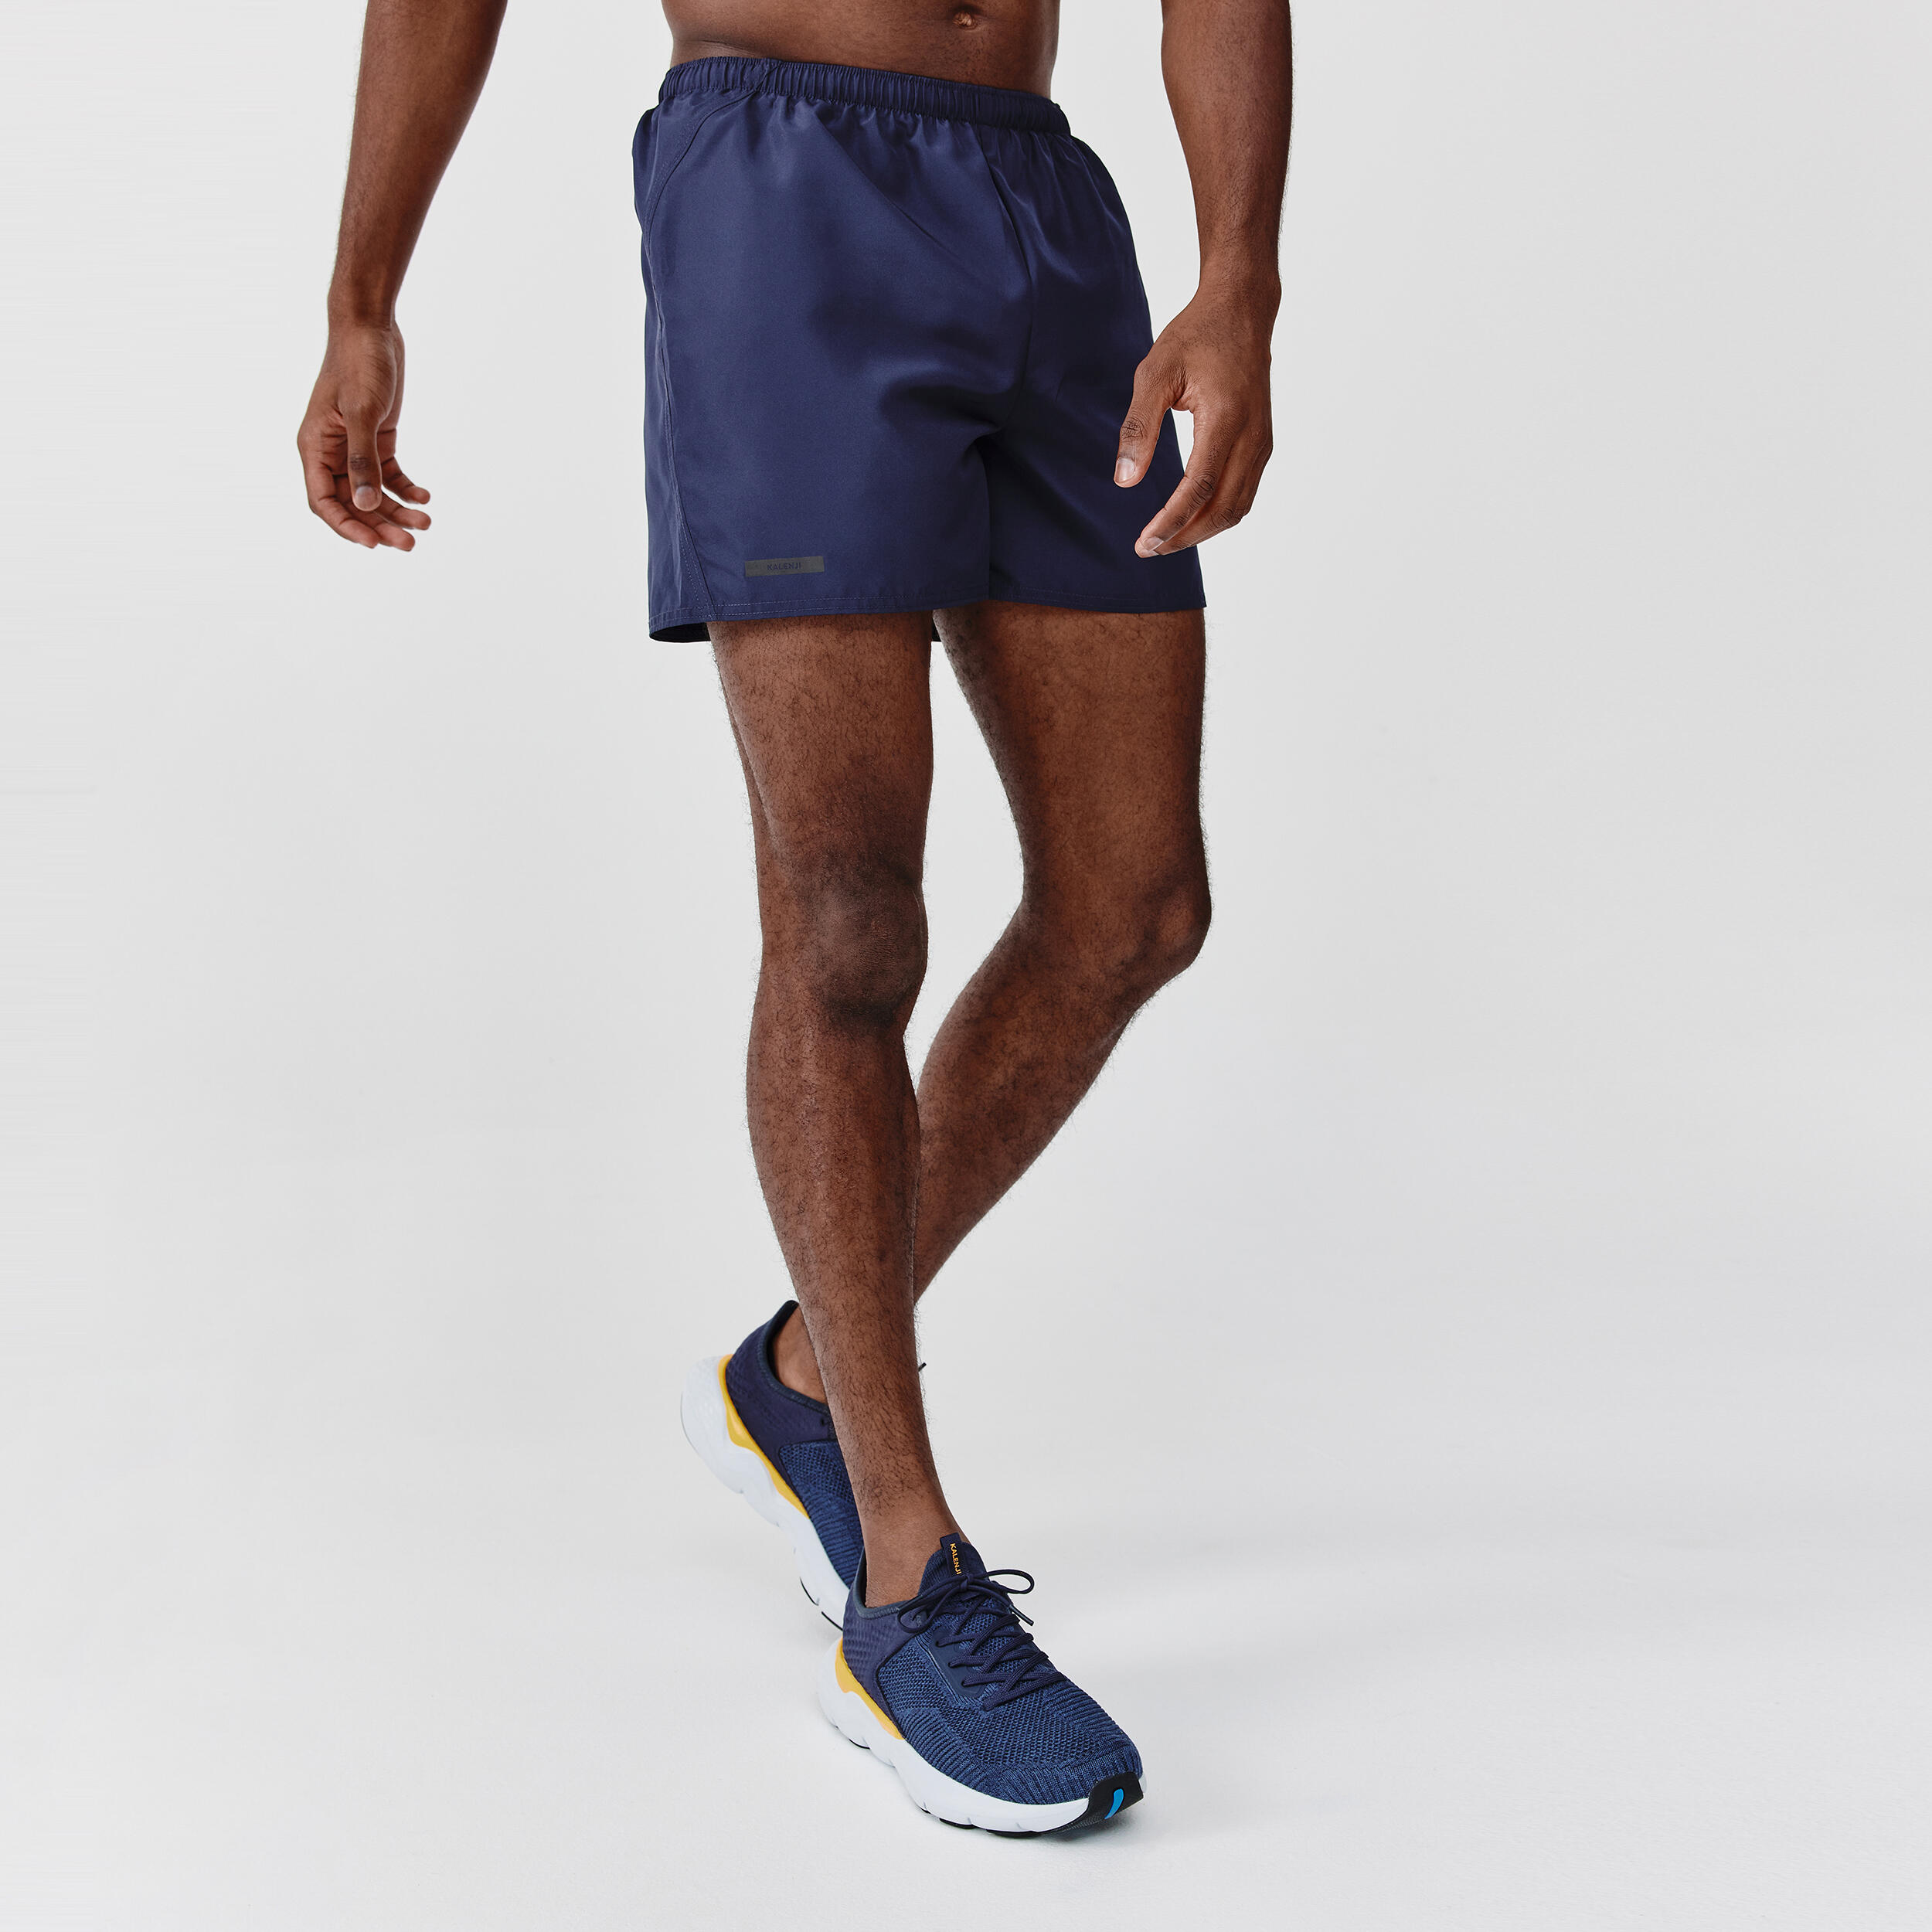 Men's Breathable Running Shorts - Dry Black - black - Kalenji - Decathlon